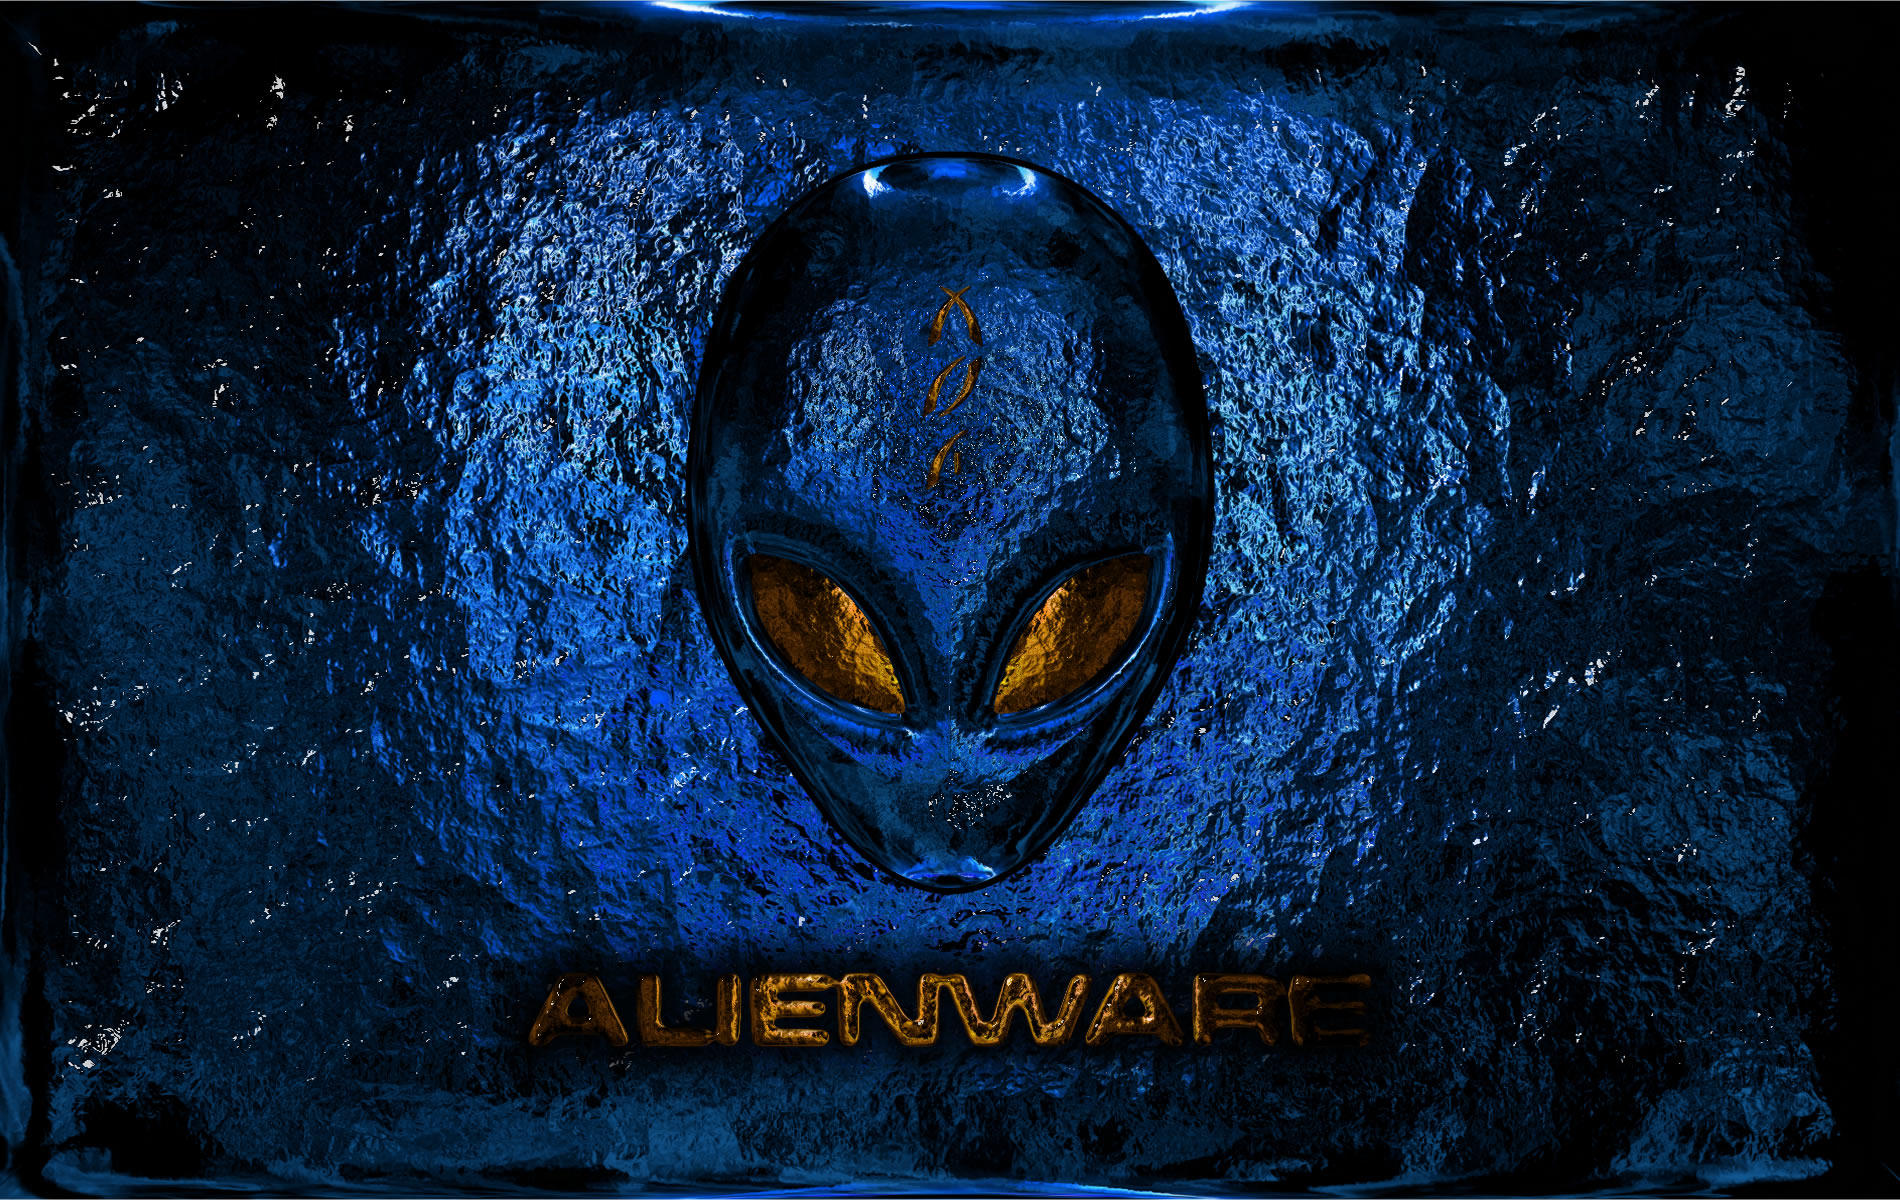 Wallpaper Alienware Background For Laptops Desktops